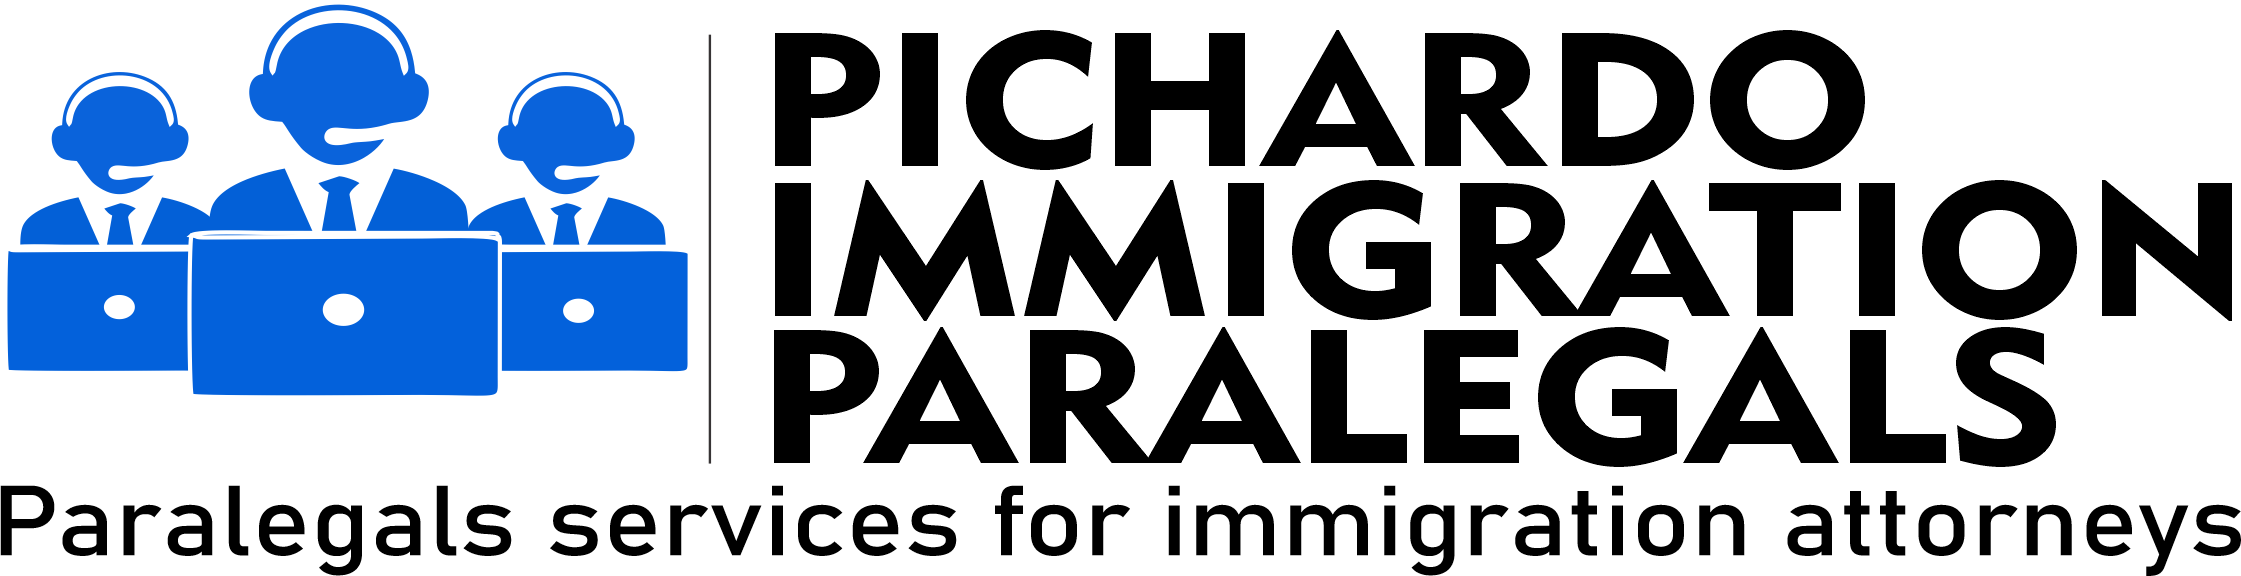 Pichardo Immigration Paralegals